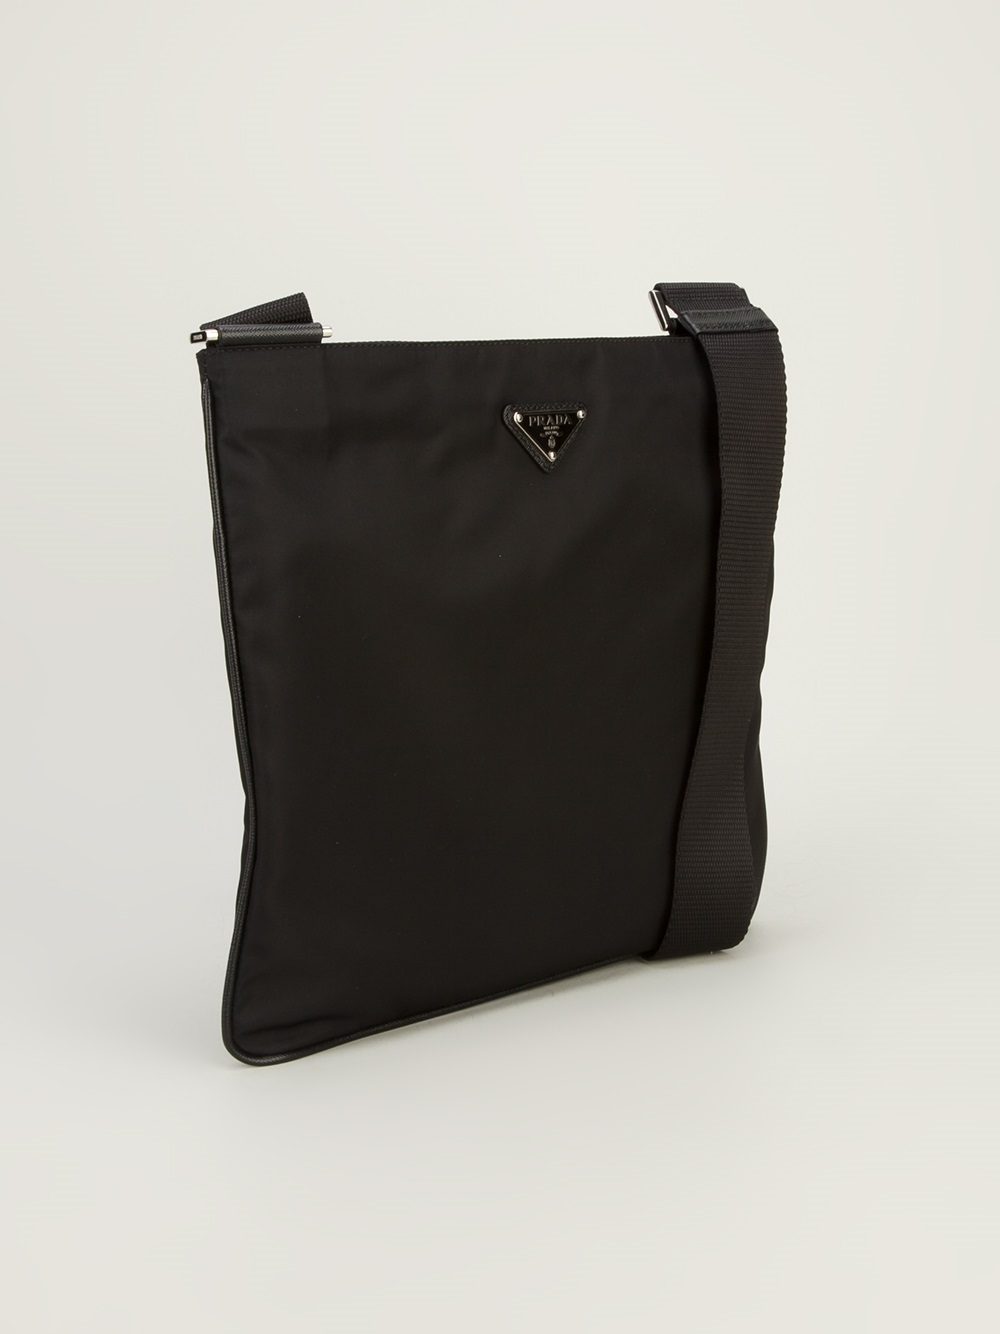 prada black leather messenger bag, prada crossbody leather bag